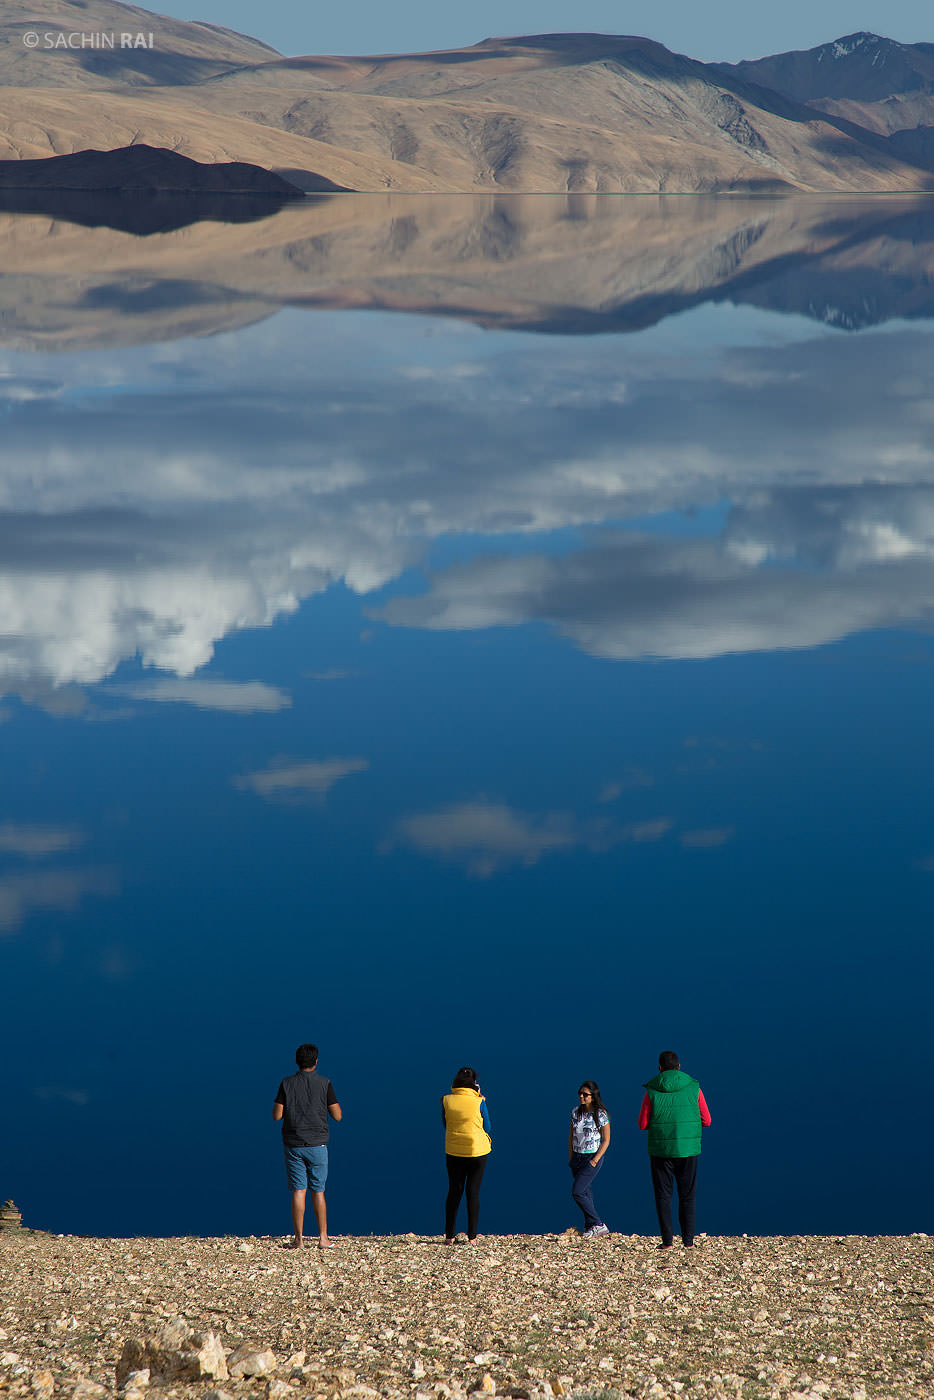 Tourists standing in front of the Tso Moriri Lake, Ladakh, India